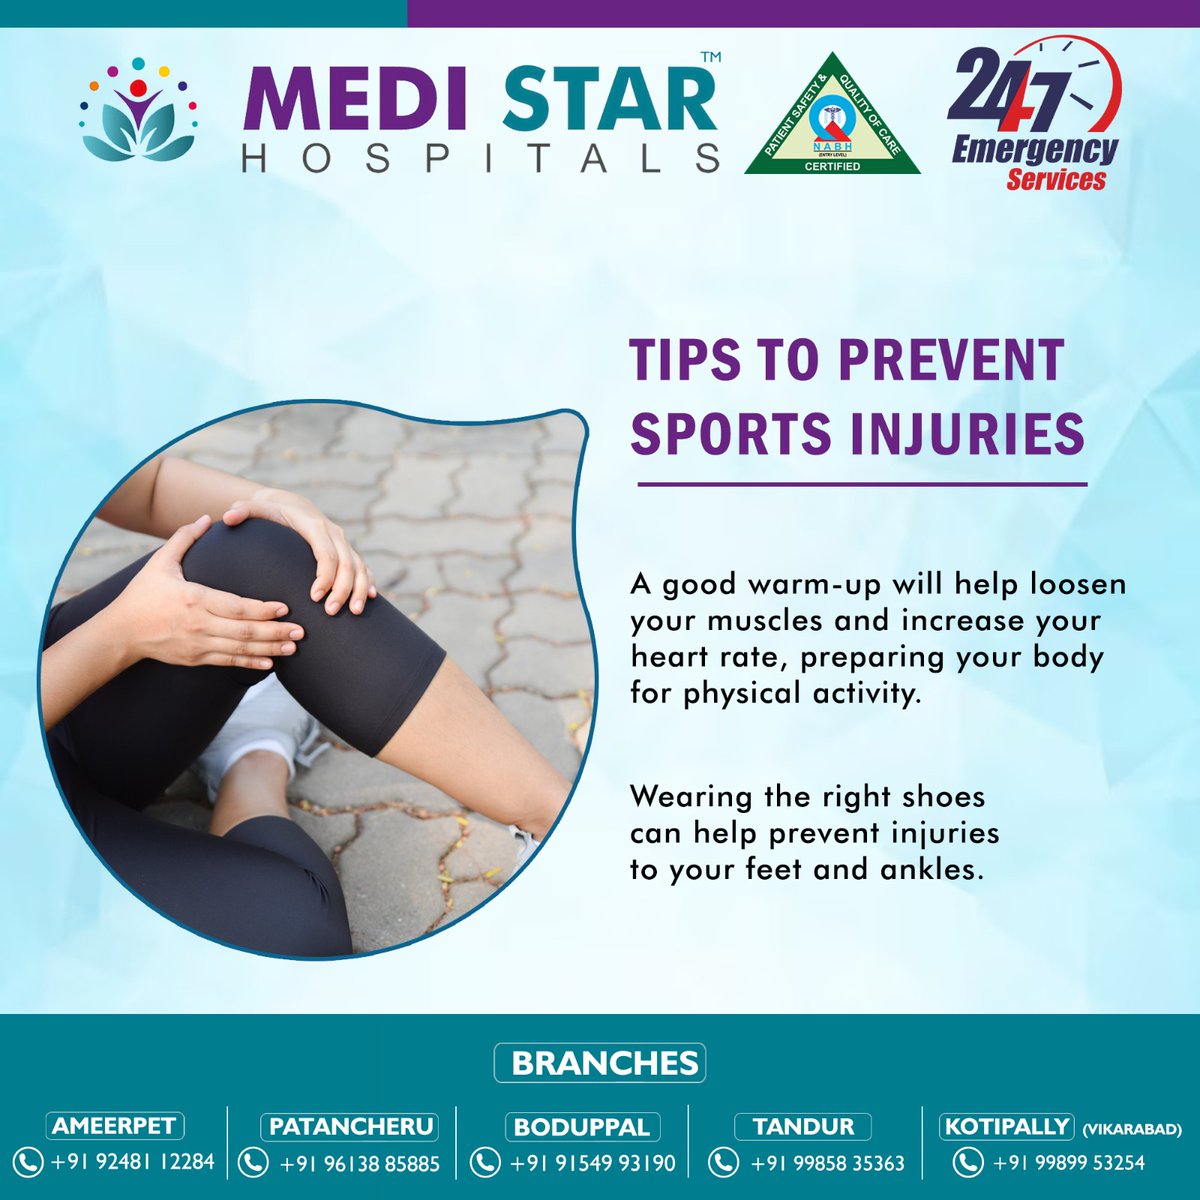 Tips To Prevent Sports Injuries

#SportsInjury #KneeInjury #AnkleInjury #Recovery #StressFracture #BoneInjury #RestAndRecovery #Medistarhospitals1 #Medistarhospitals